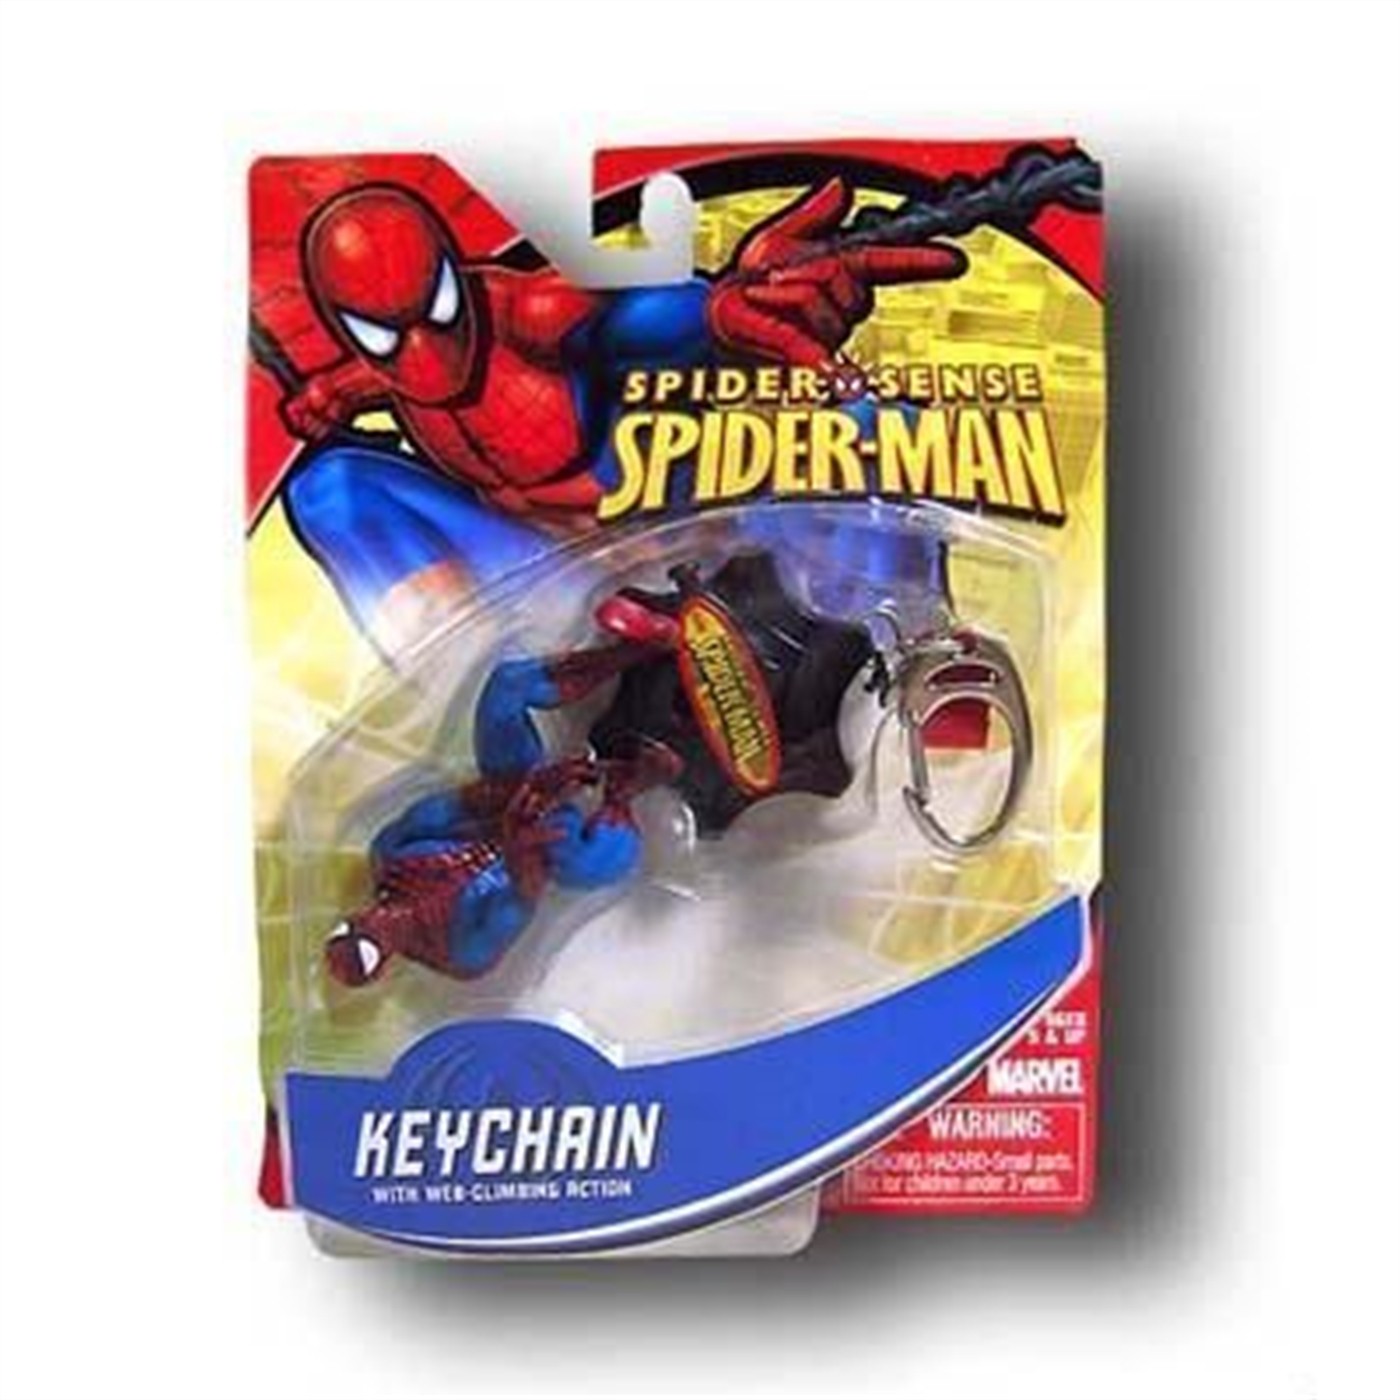 Spiderman Web Climbing Action Keychain